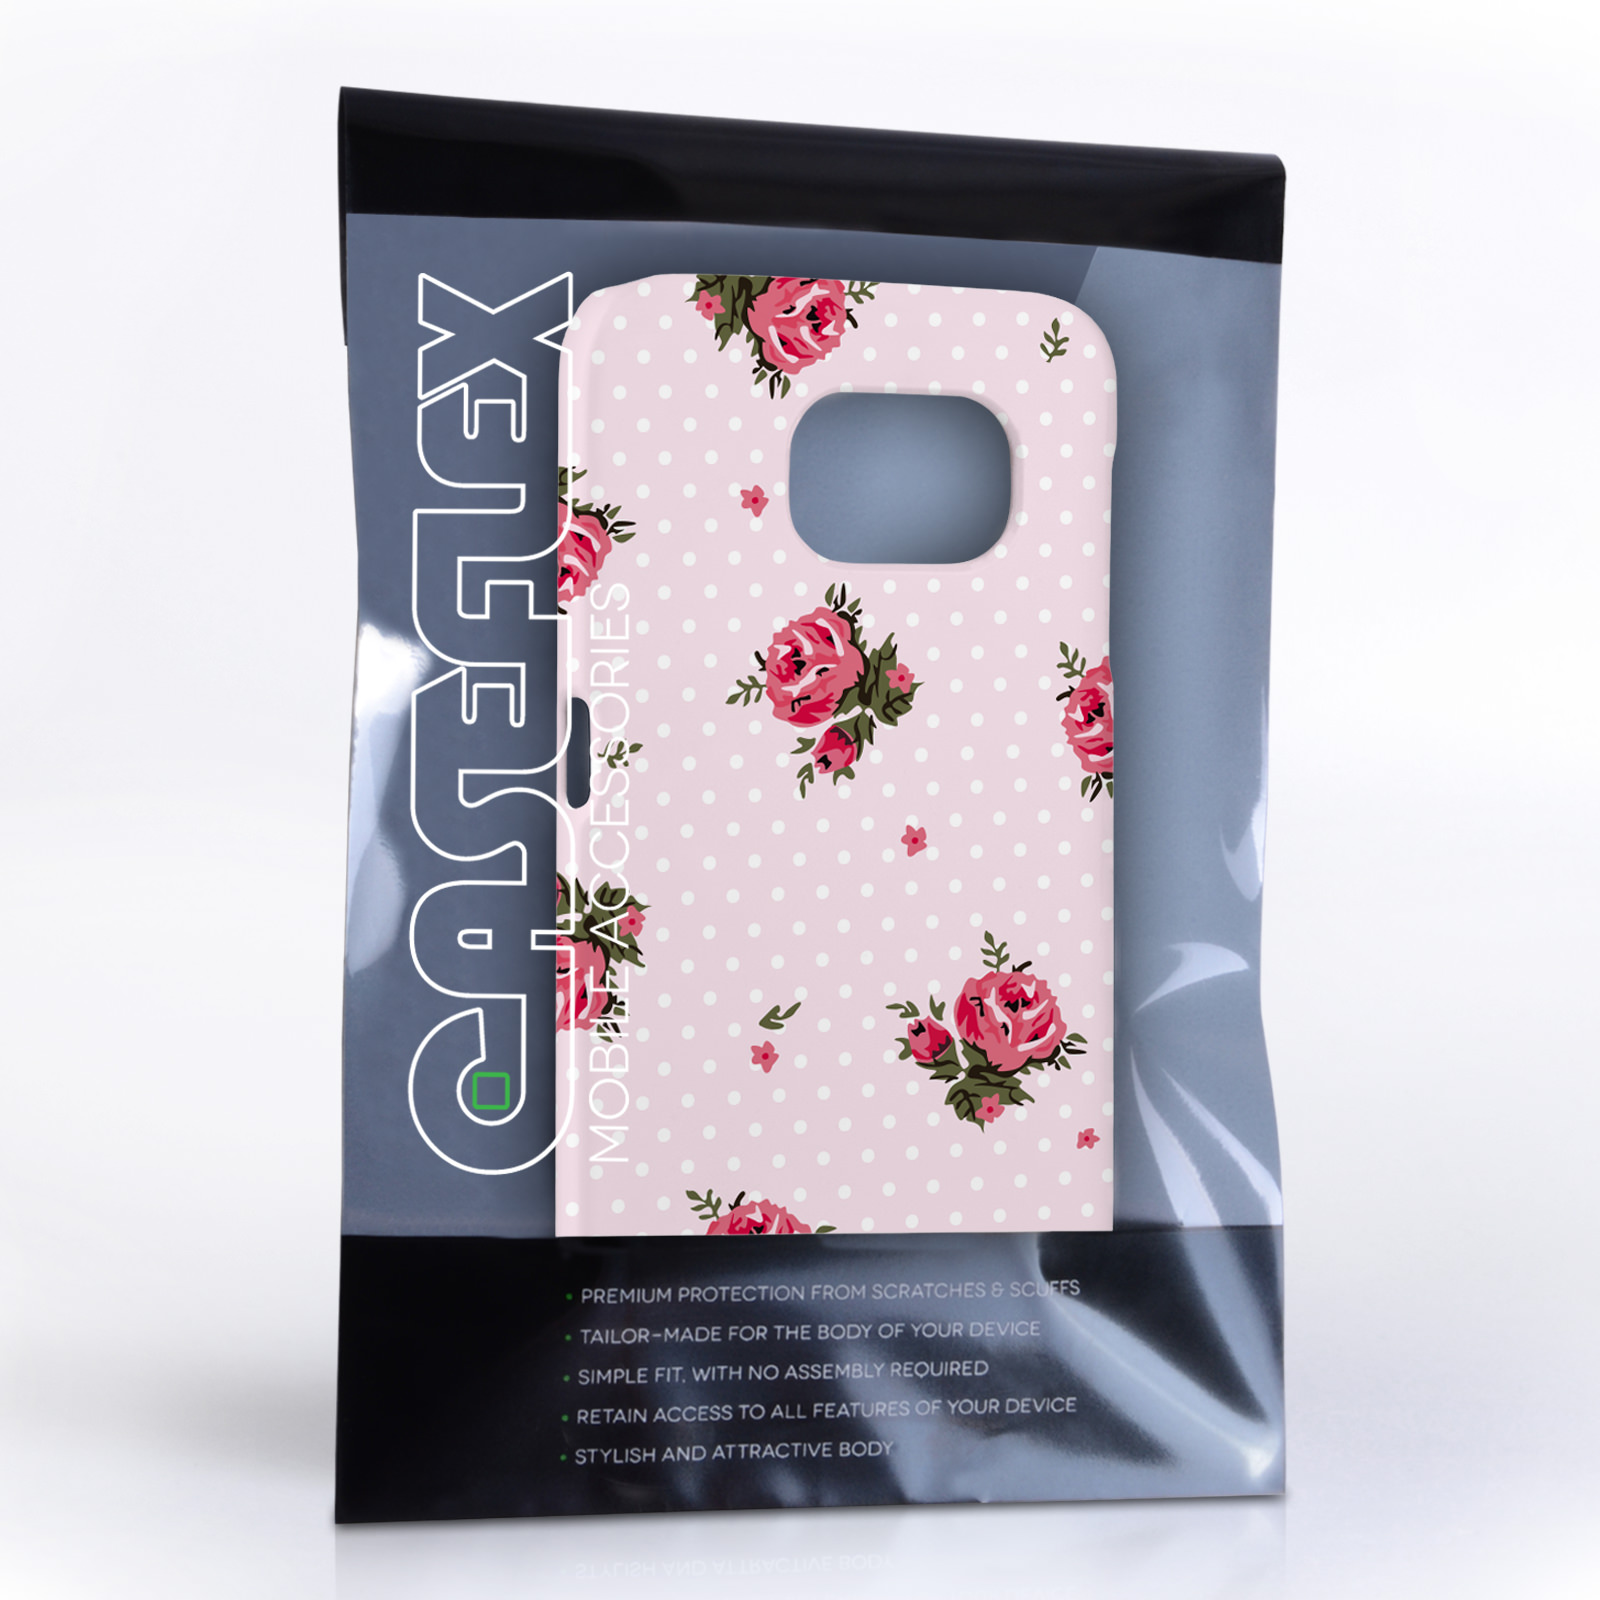 Caseflex Samsung Galaxy S6 Vintage Roses Polka Dot Wallpaper Hard Case – Pink